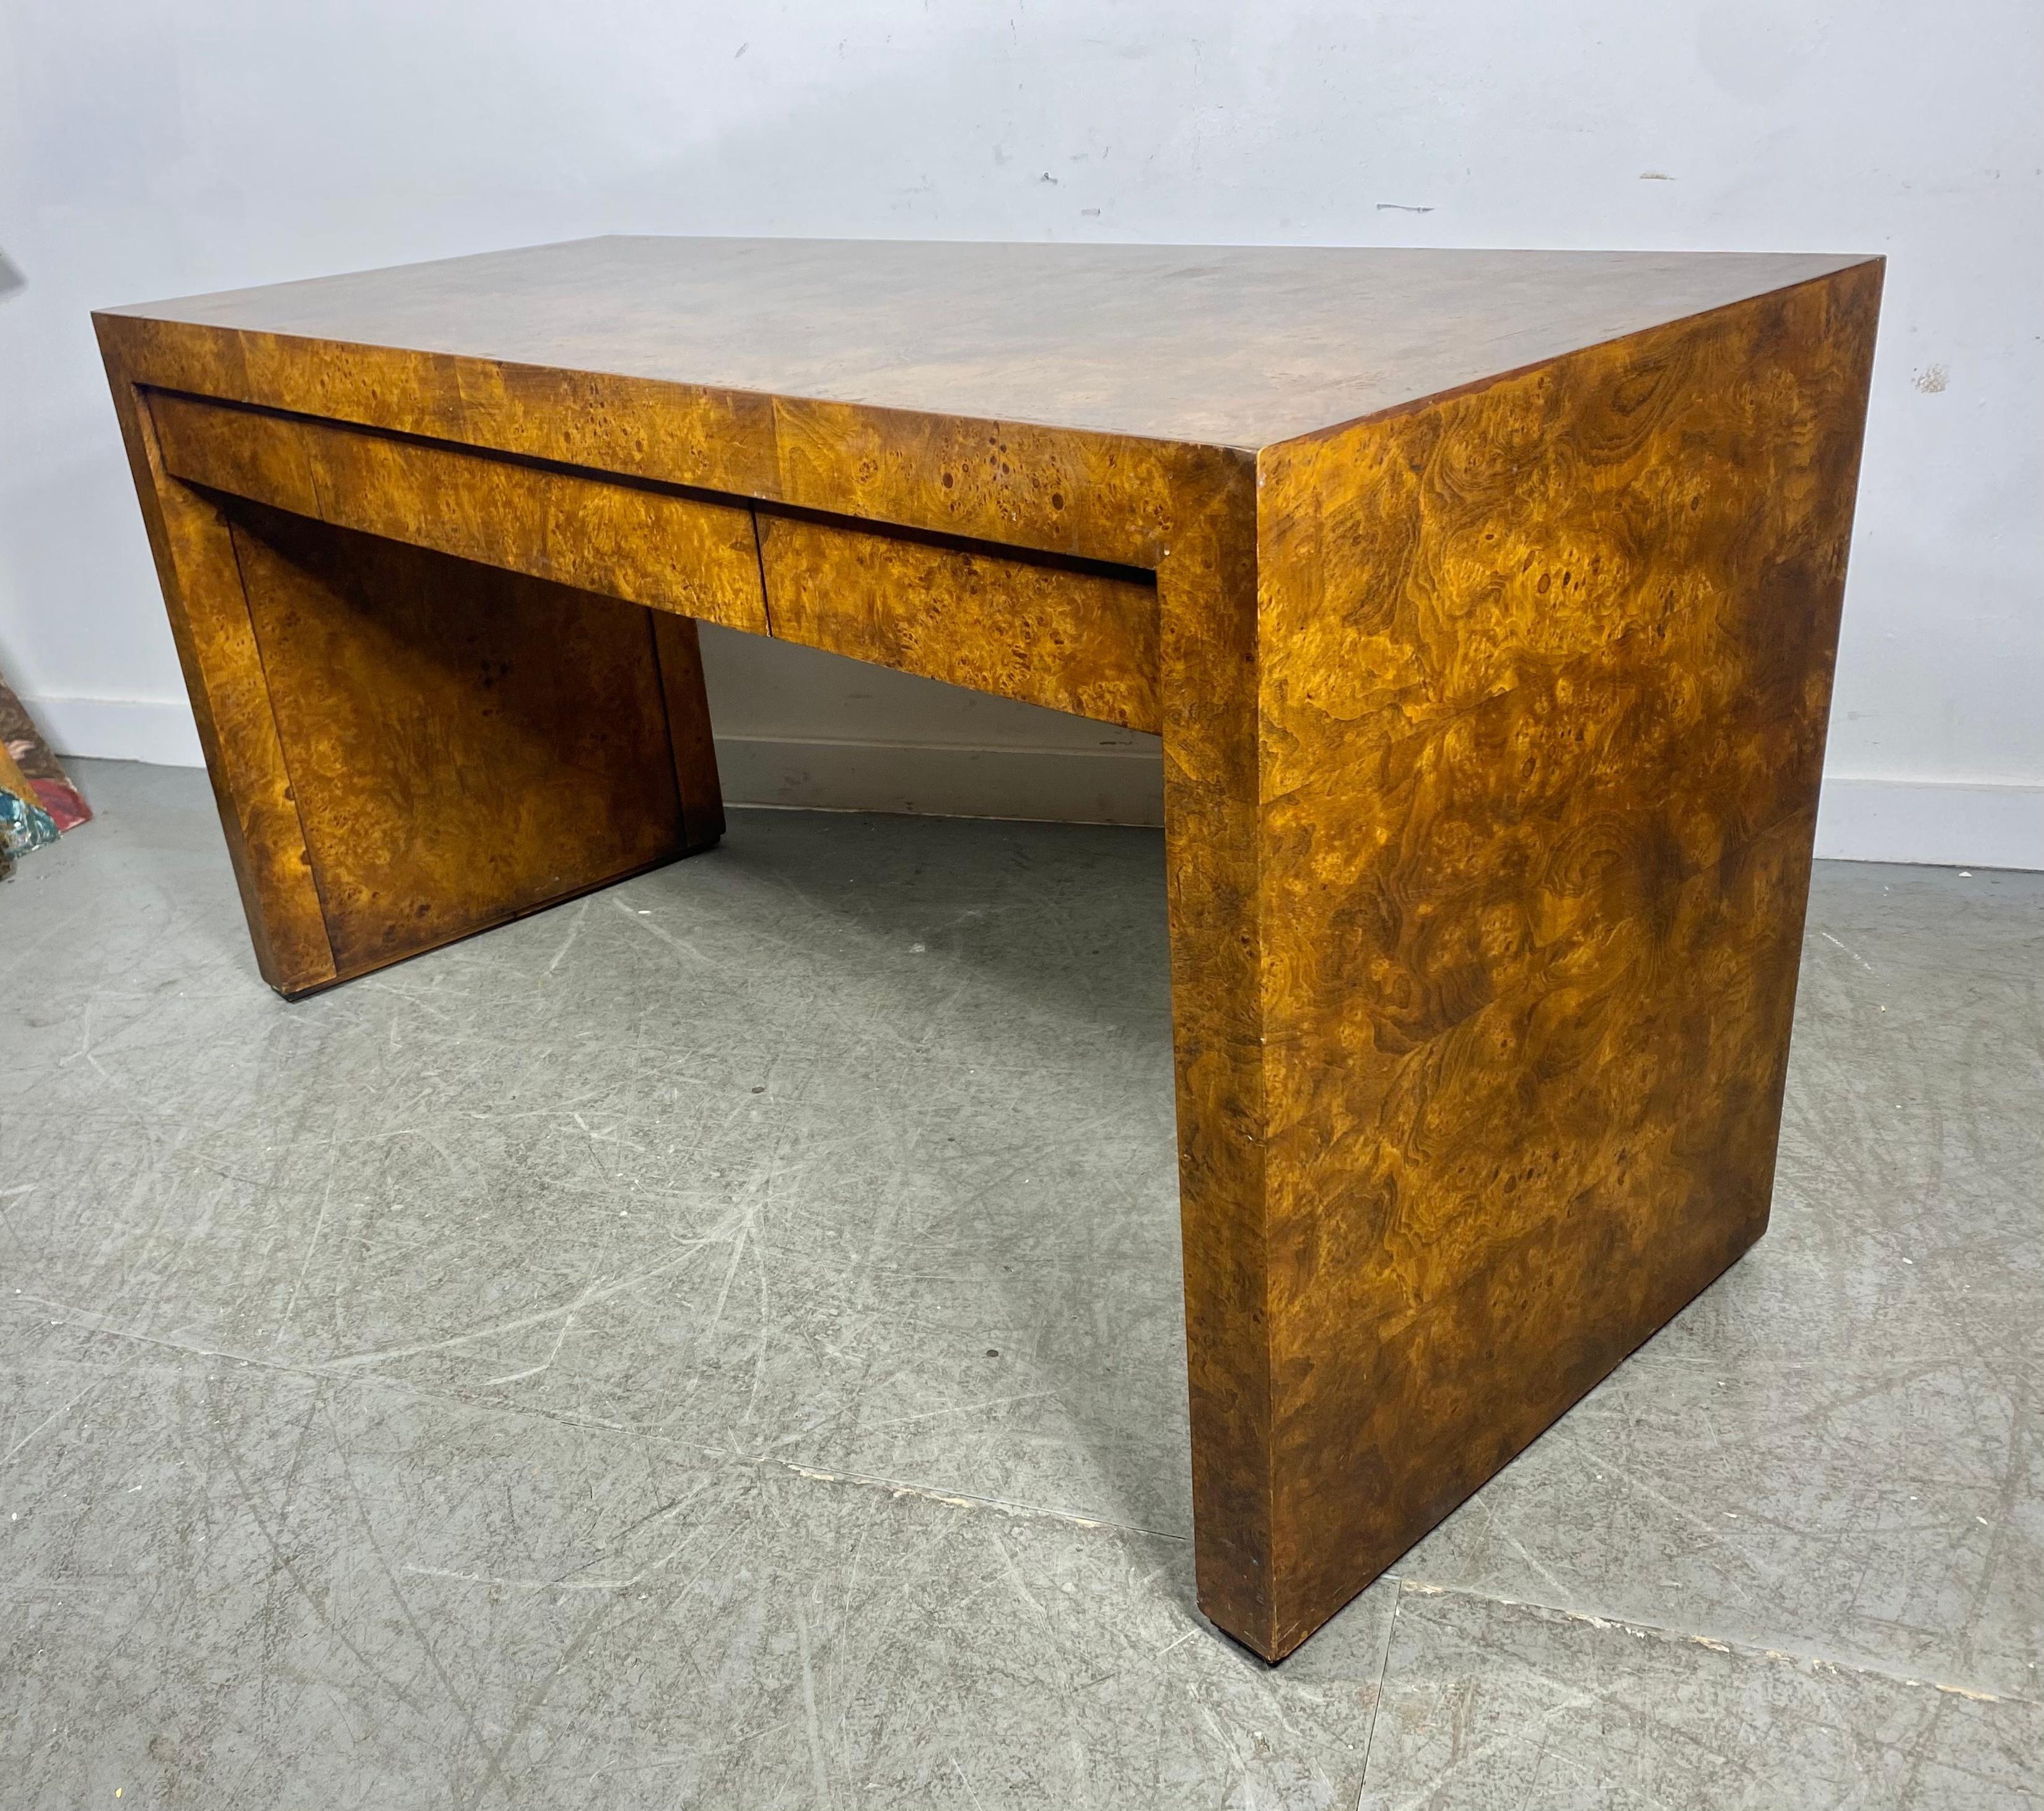 American Classic Modernist 3-Drawer Burl Wood Desk designed by Milo Baughman